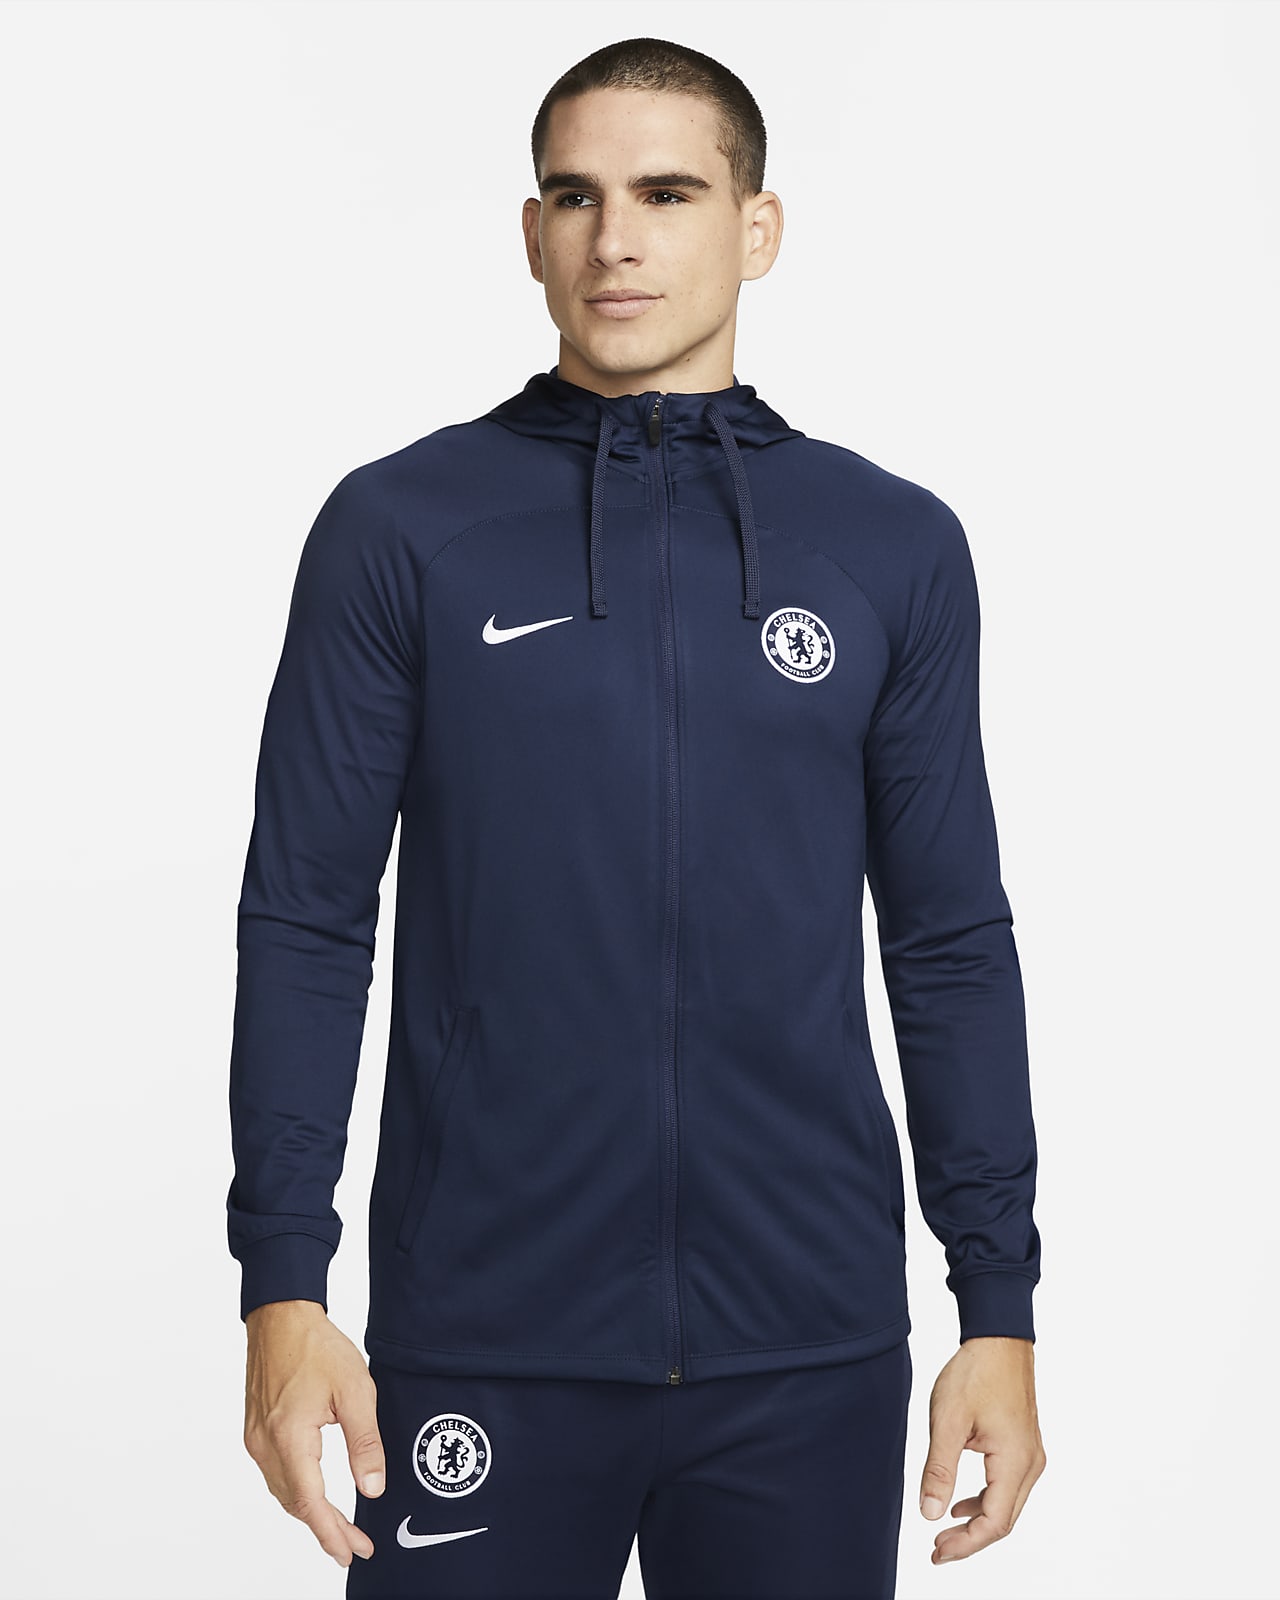 Chelsea FC Nike Dri-FIT Track Jacket.